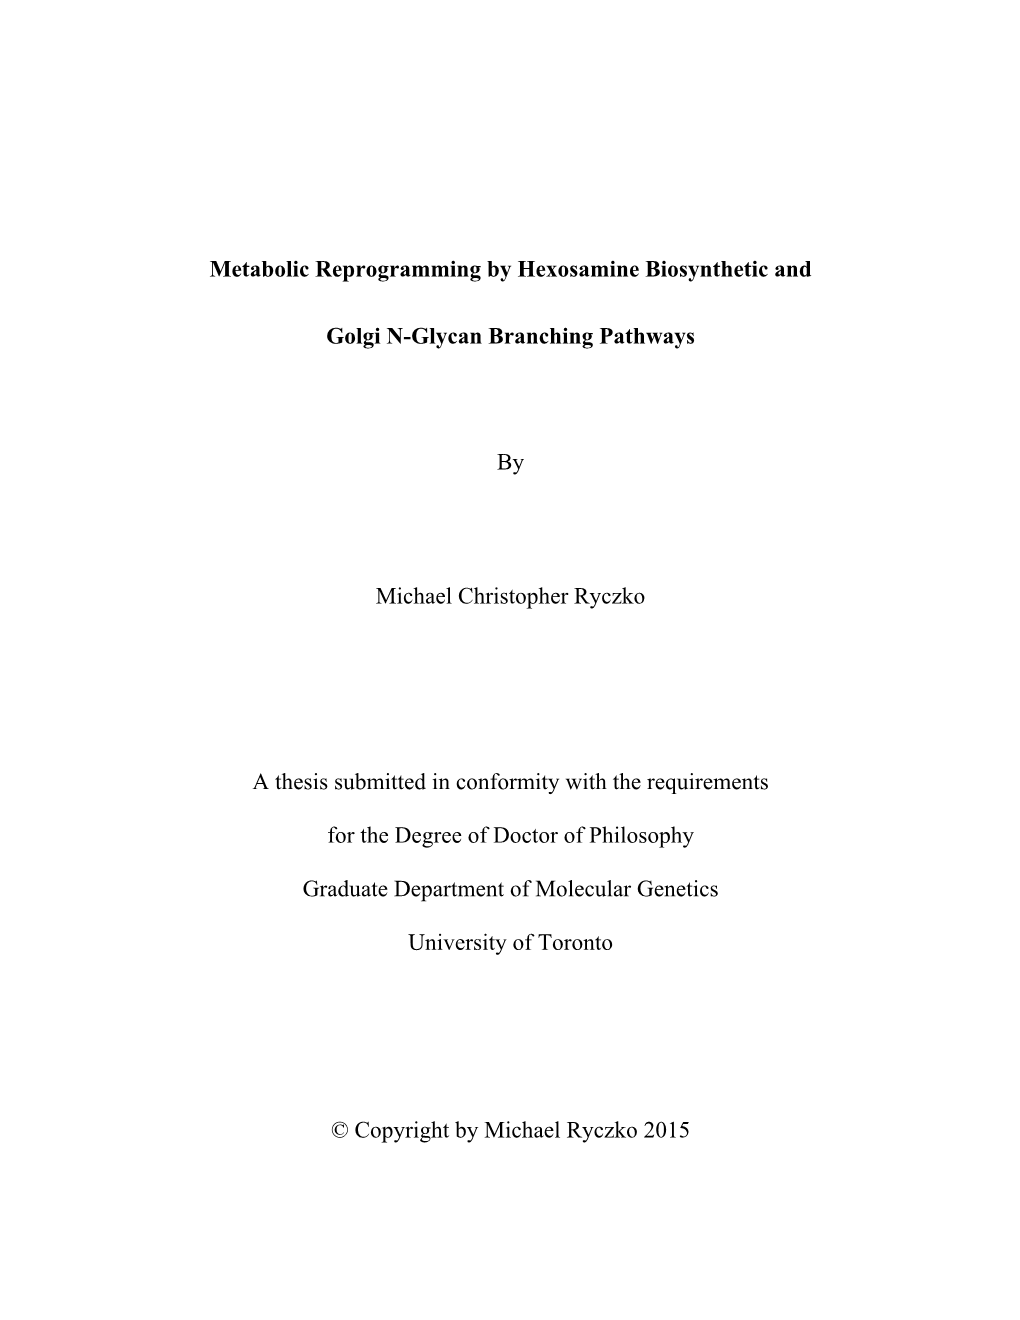 Metabolic Reprogramming by Hexosamine Biosynthetic and Golgi